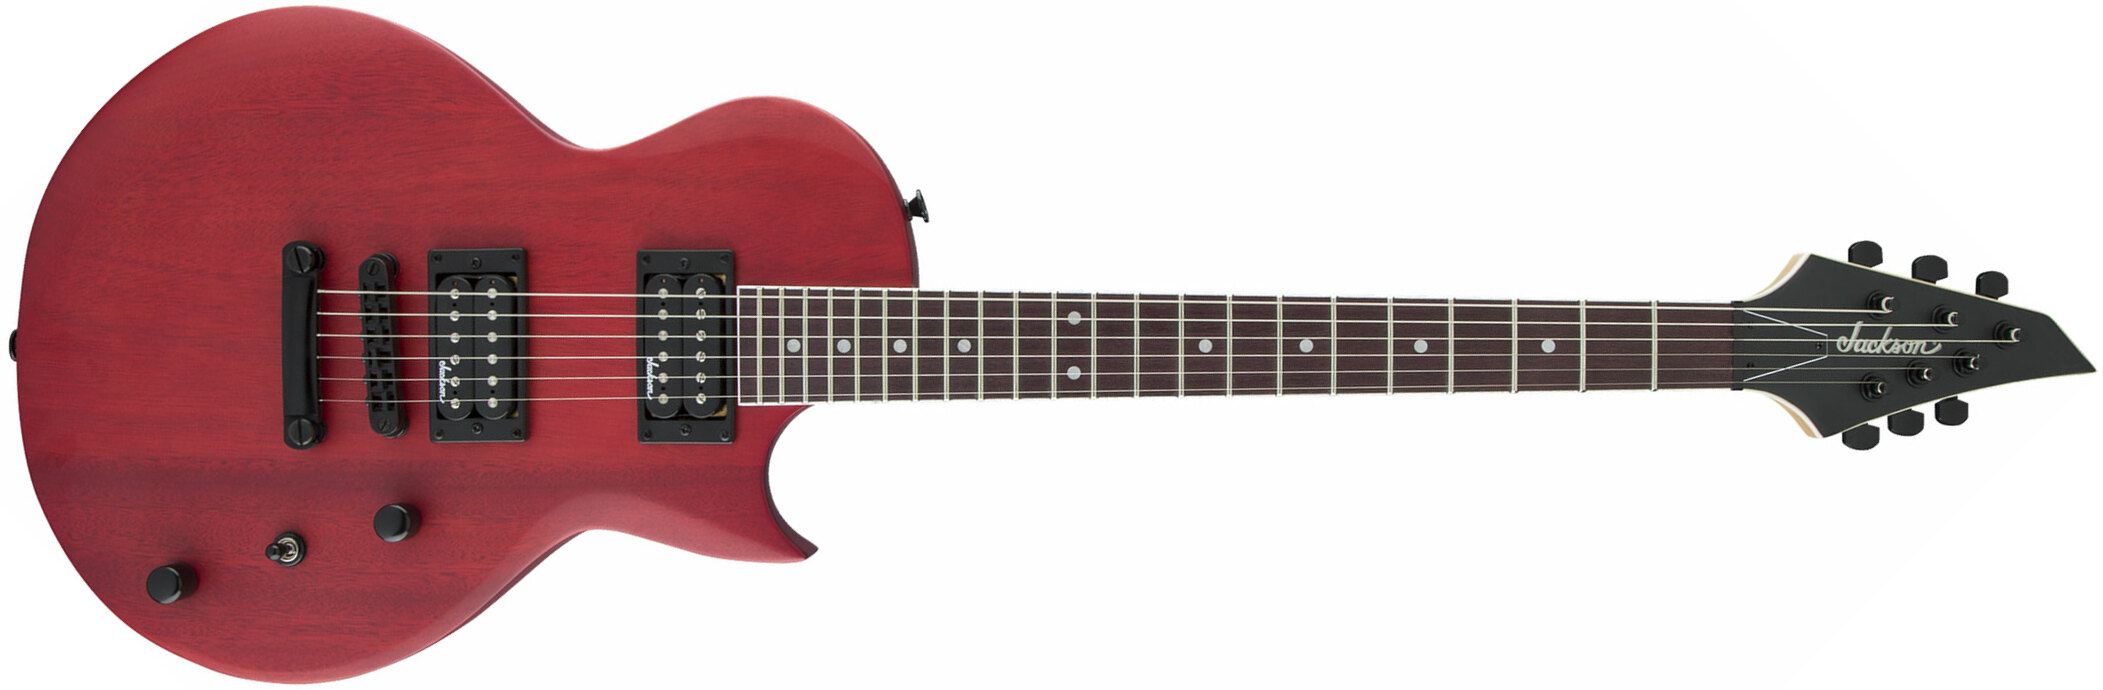 Jackson Monarkh Sc Js22 2h Ht Ama - Red Stain - Single cut electric guitar - Main picture